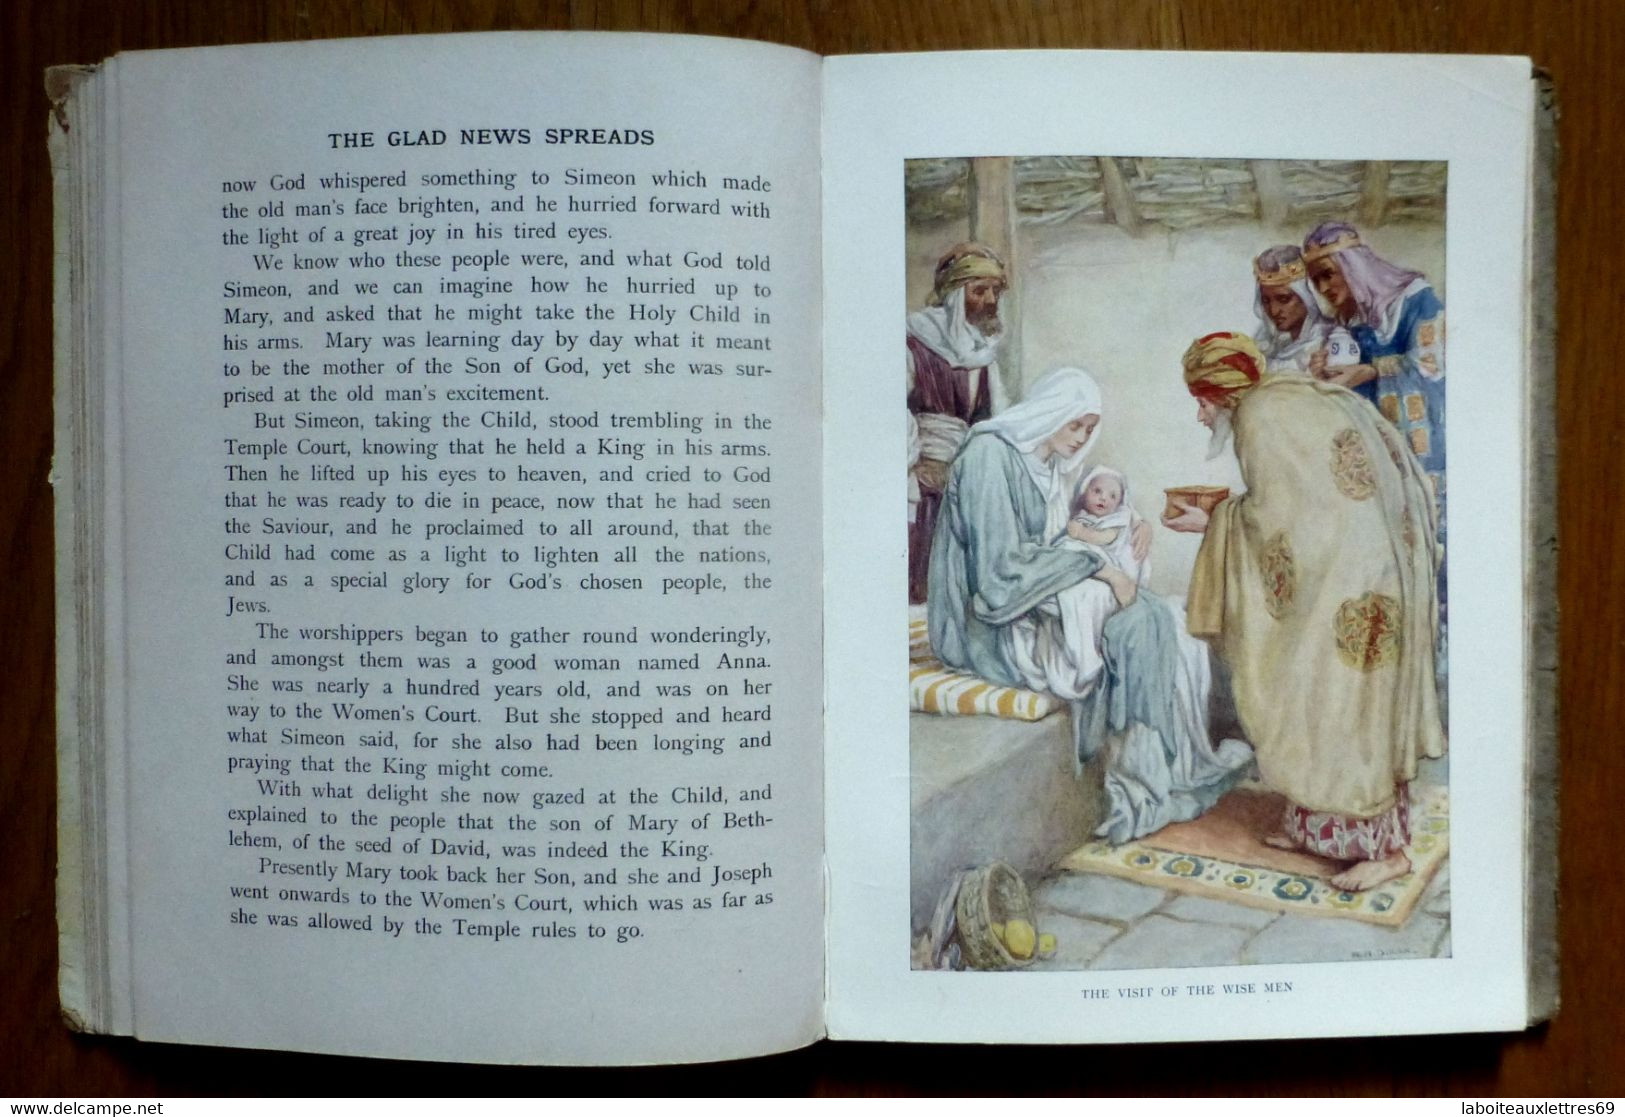 LIVRE EN ANGLAIS STORIES FROM THE BIBLE - Bijbel, Christendom